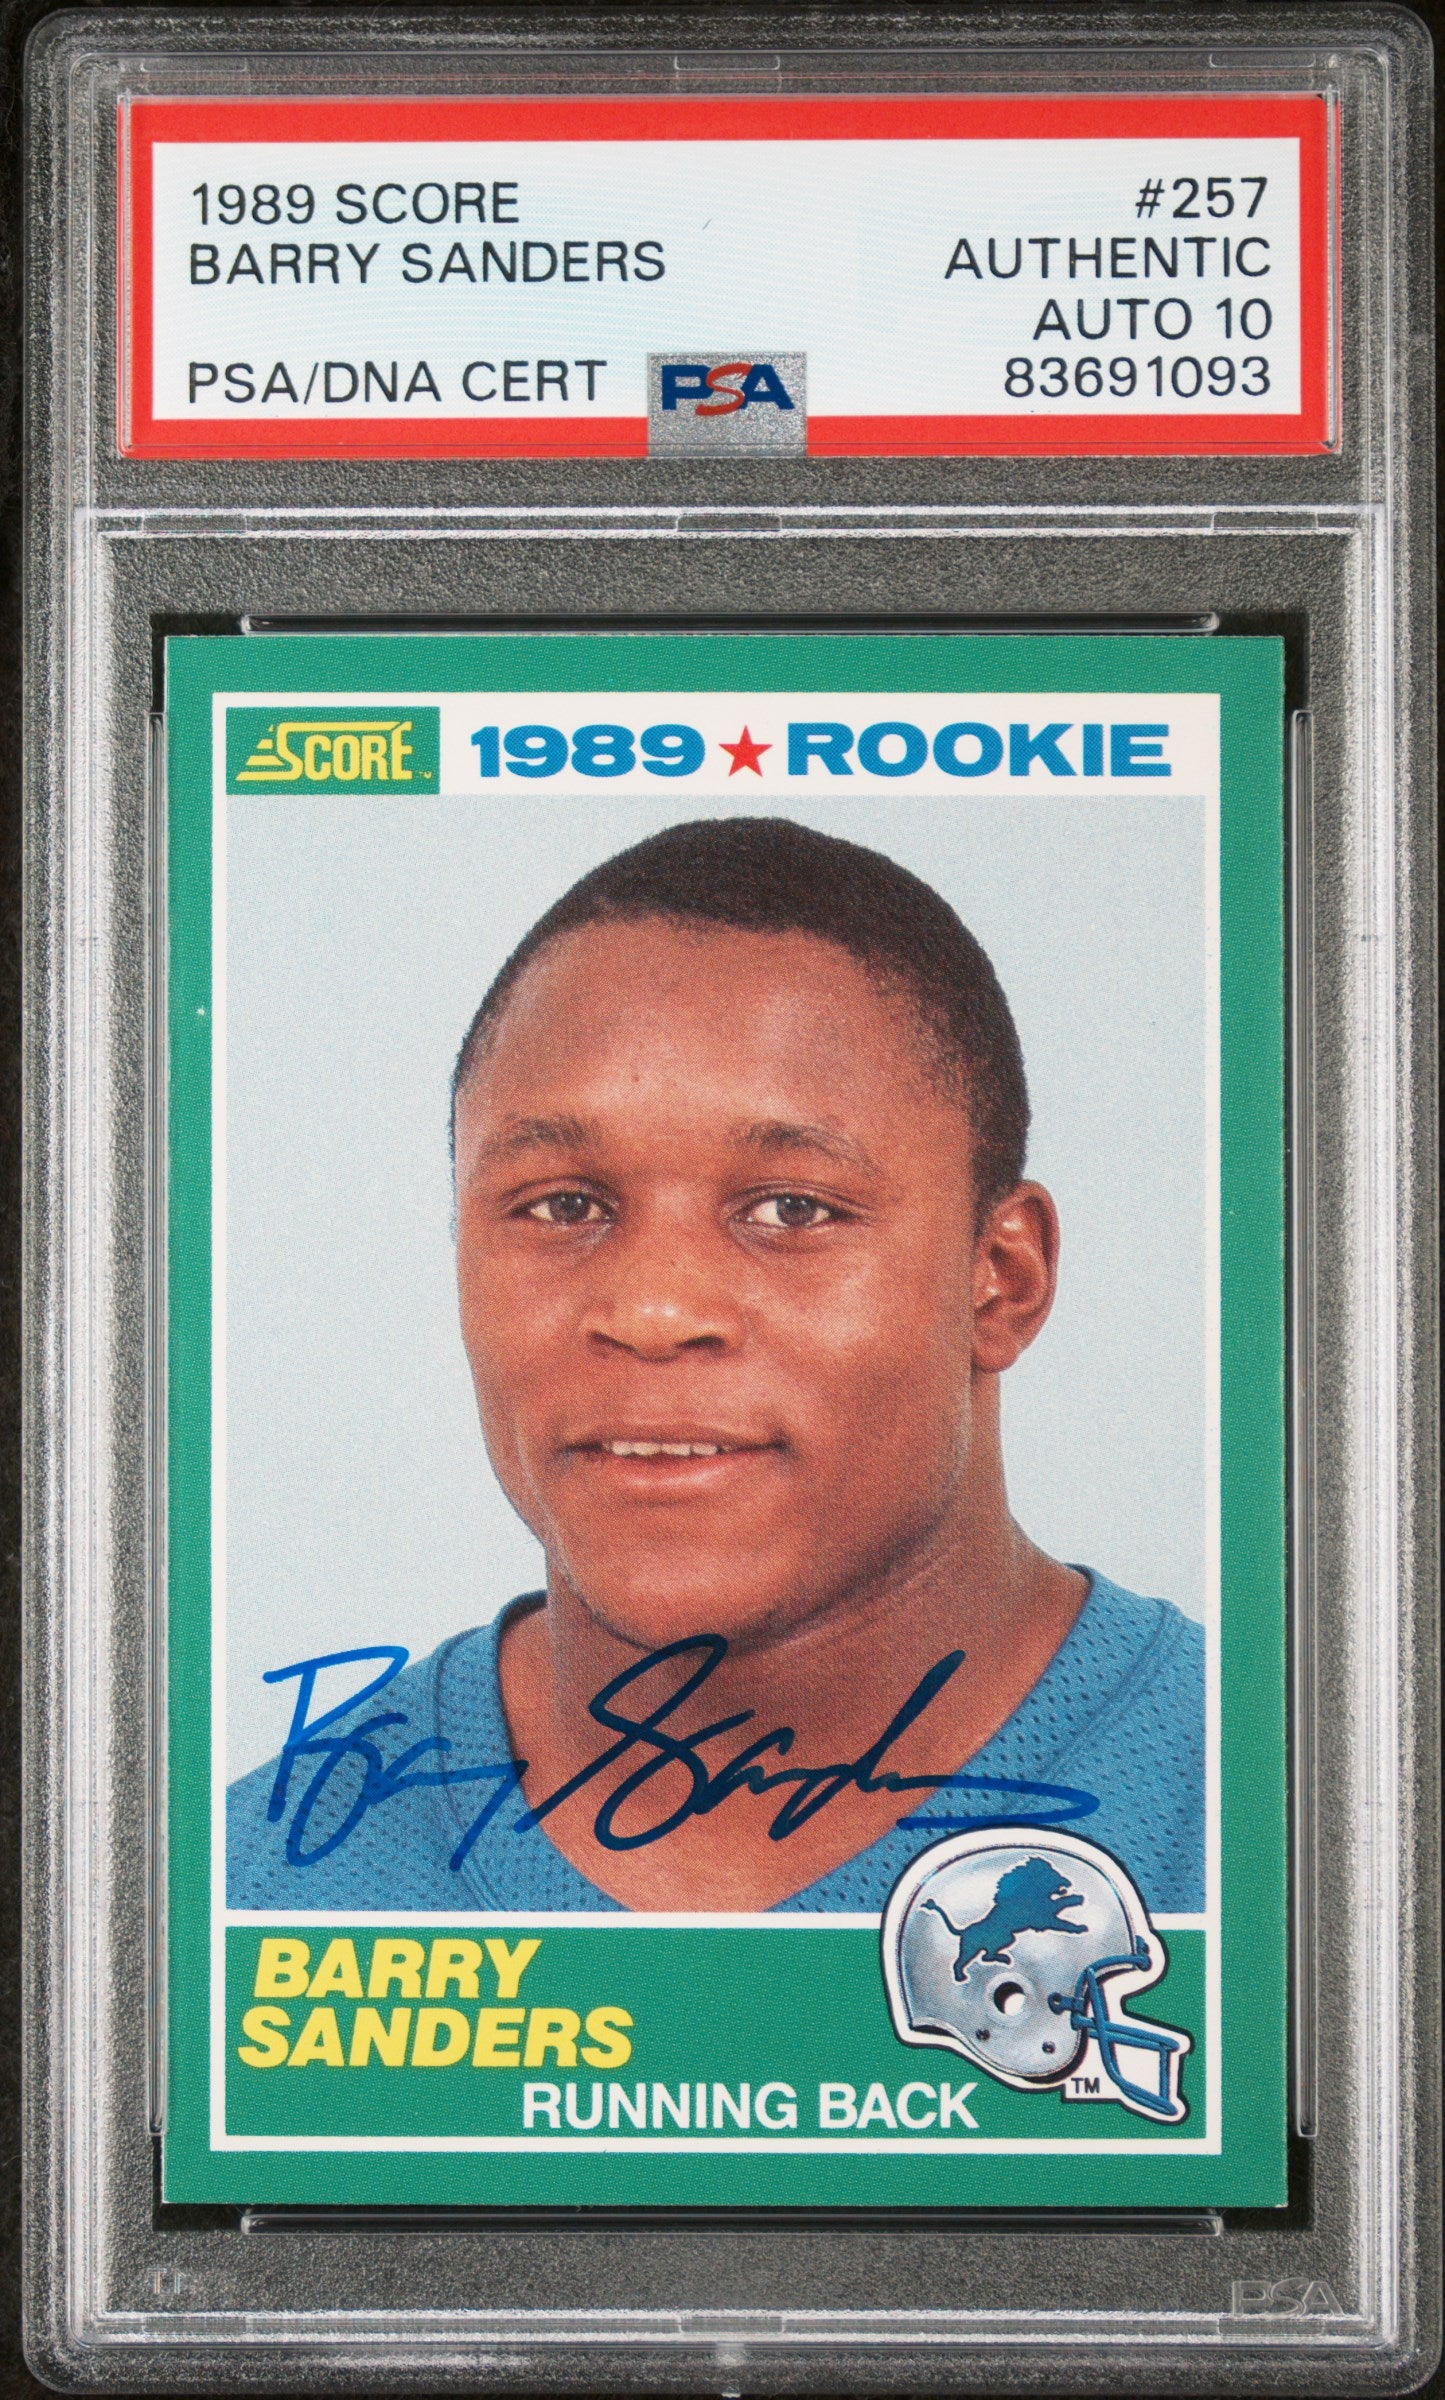 Barry Sanders 1989 Score Signed Football Rookie Card #257 Graded PSA 10 83691093